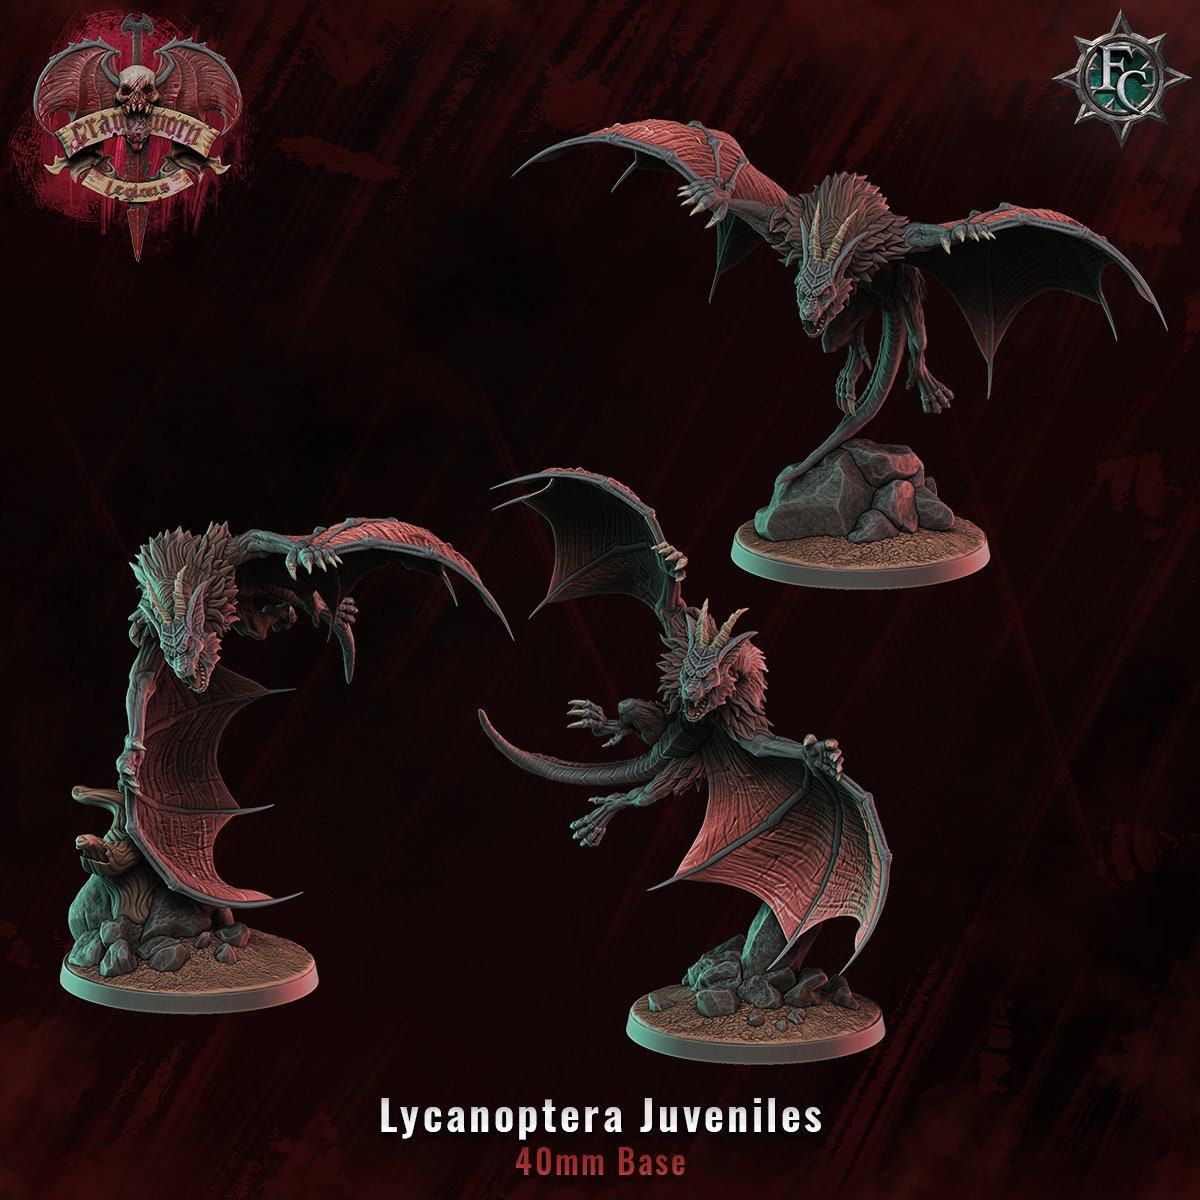 a set of four miniature figurines of a dragon